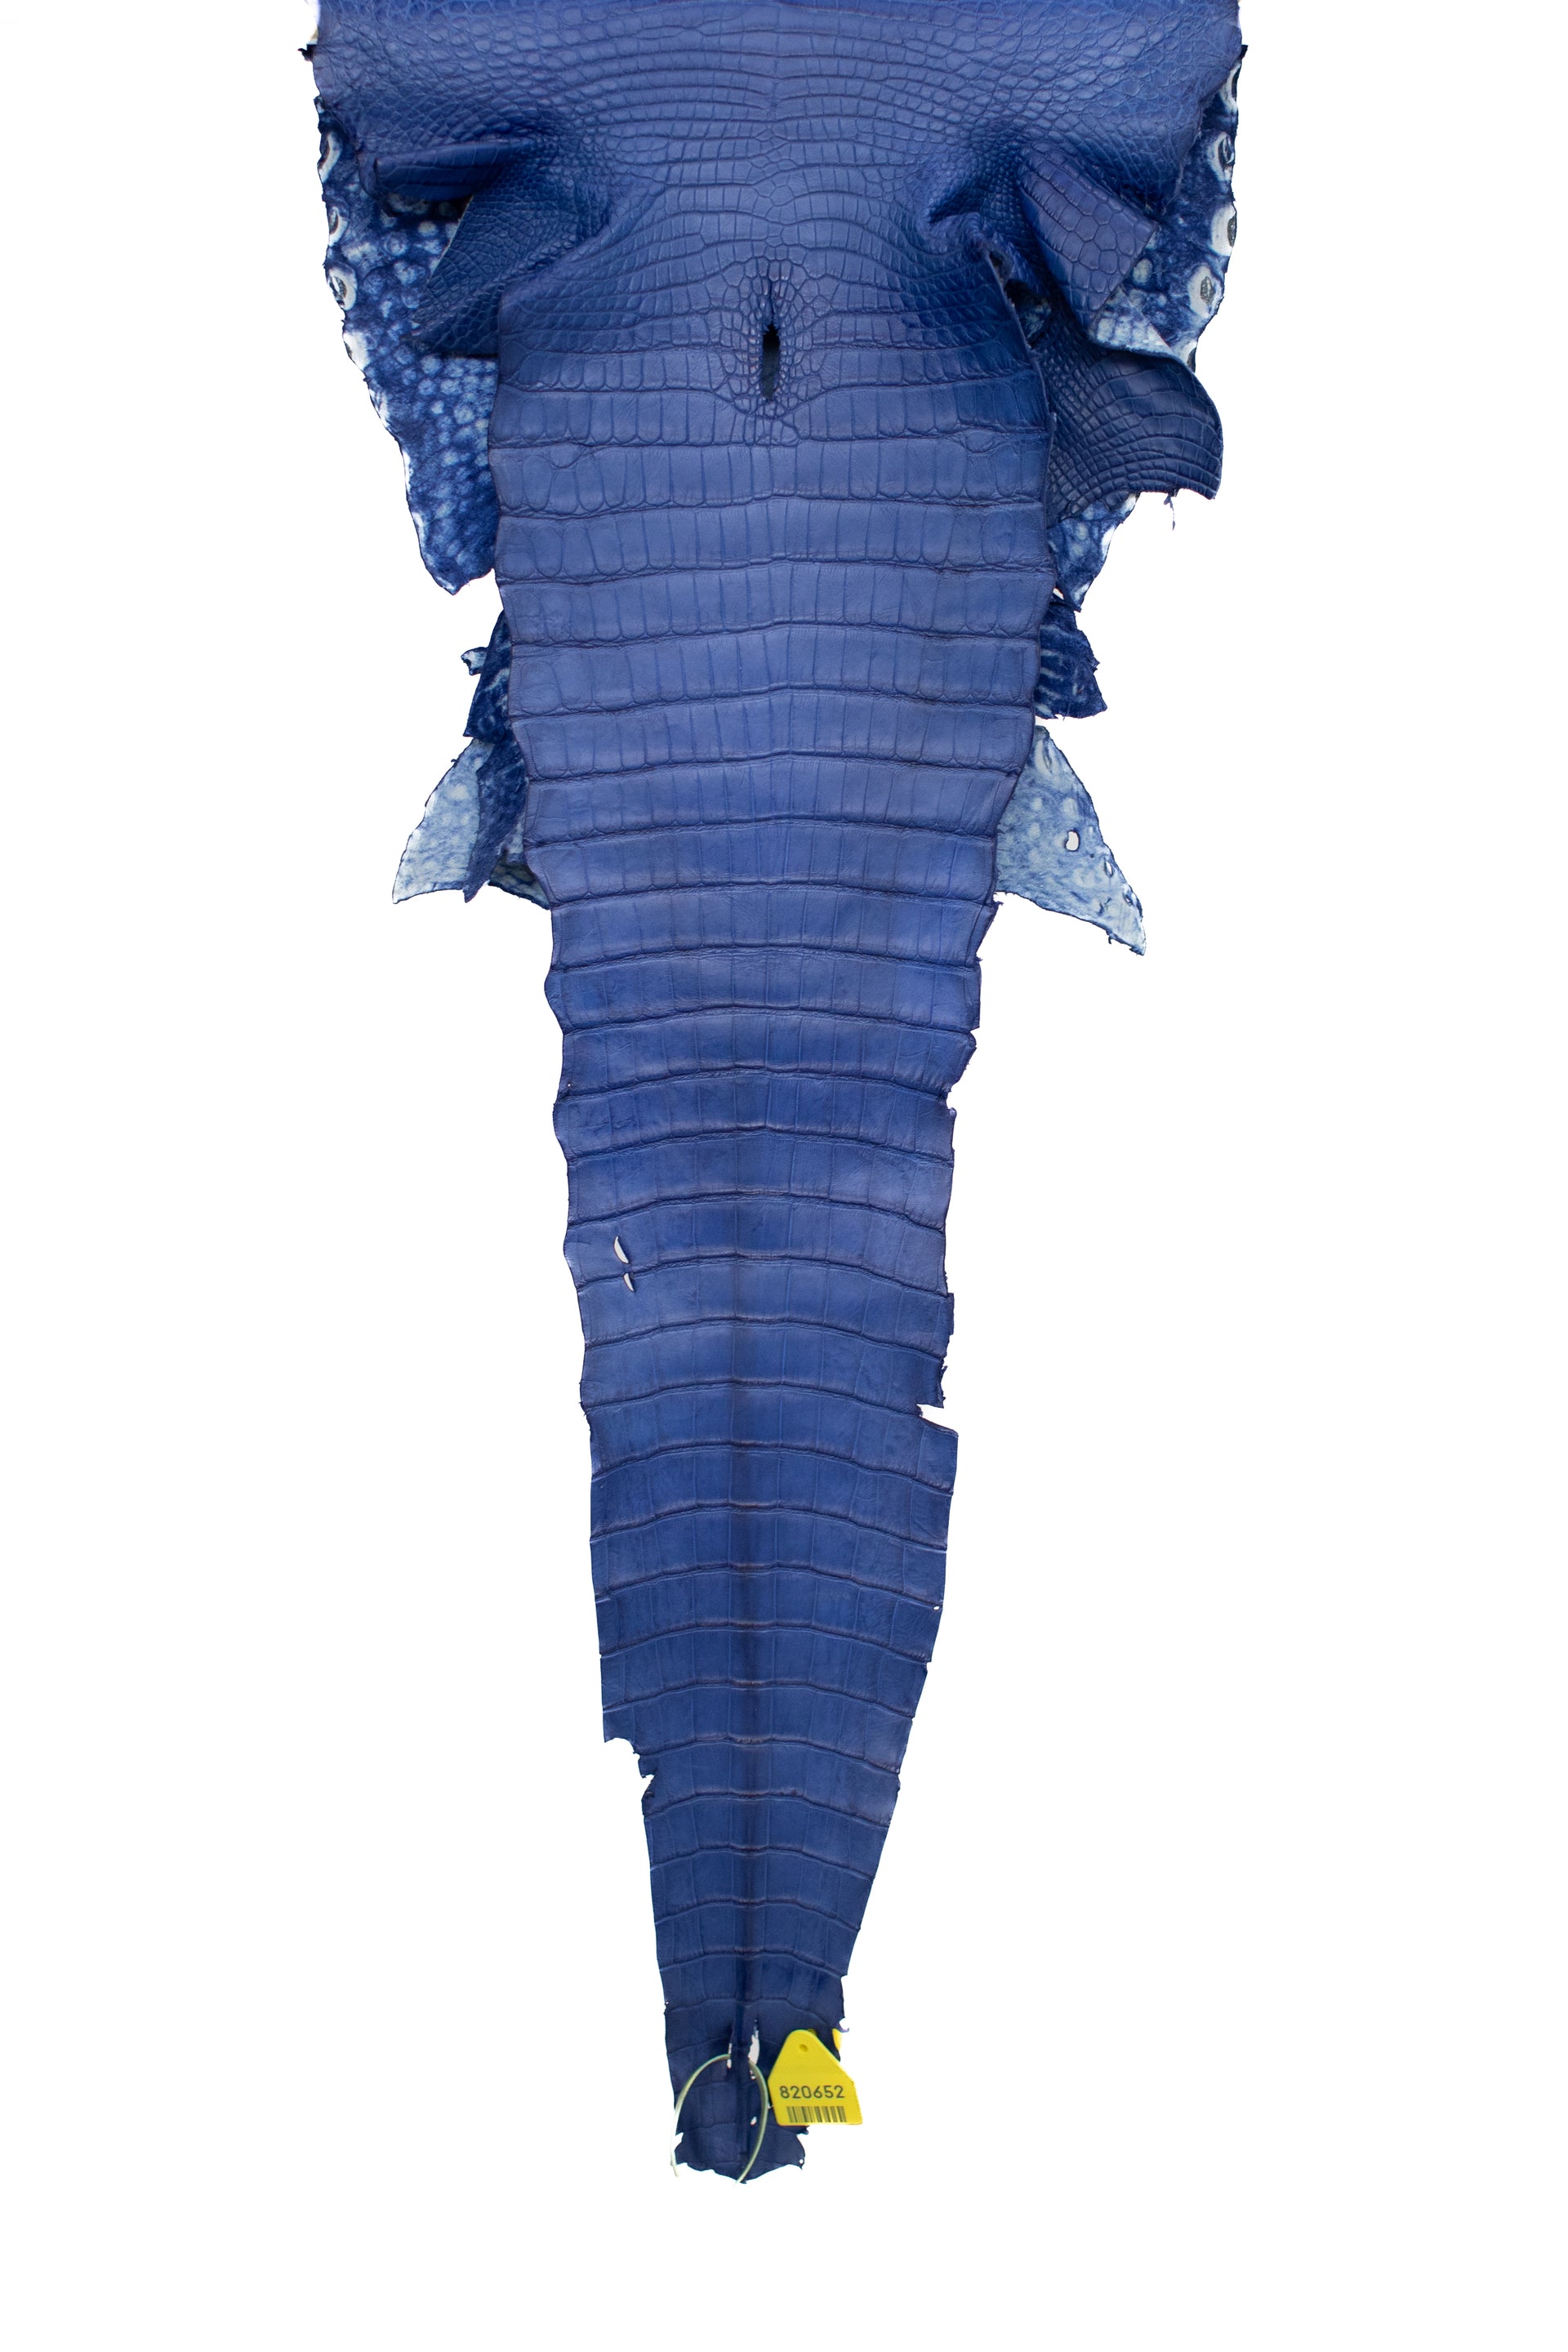 39 cm Grade 2/3 Royal Blue Matte Wild American Alligator Leather - Tag: FL16-0007487